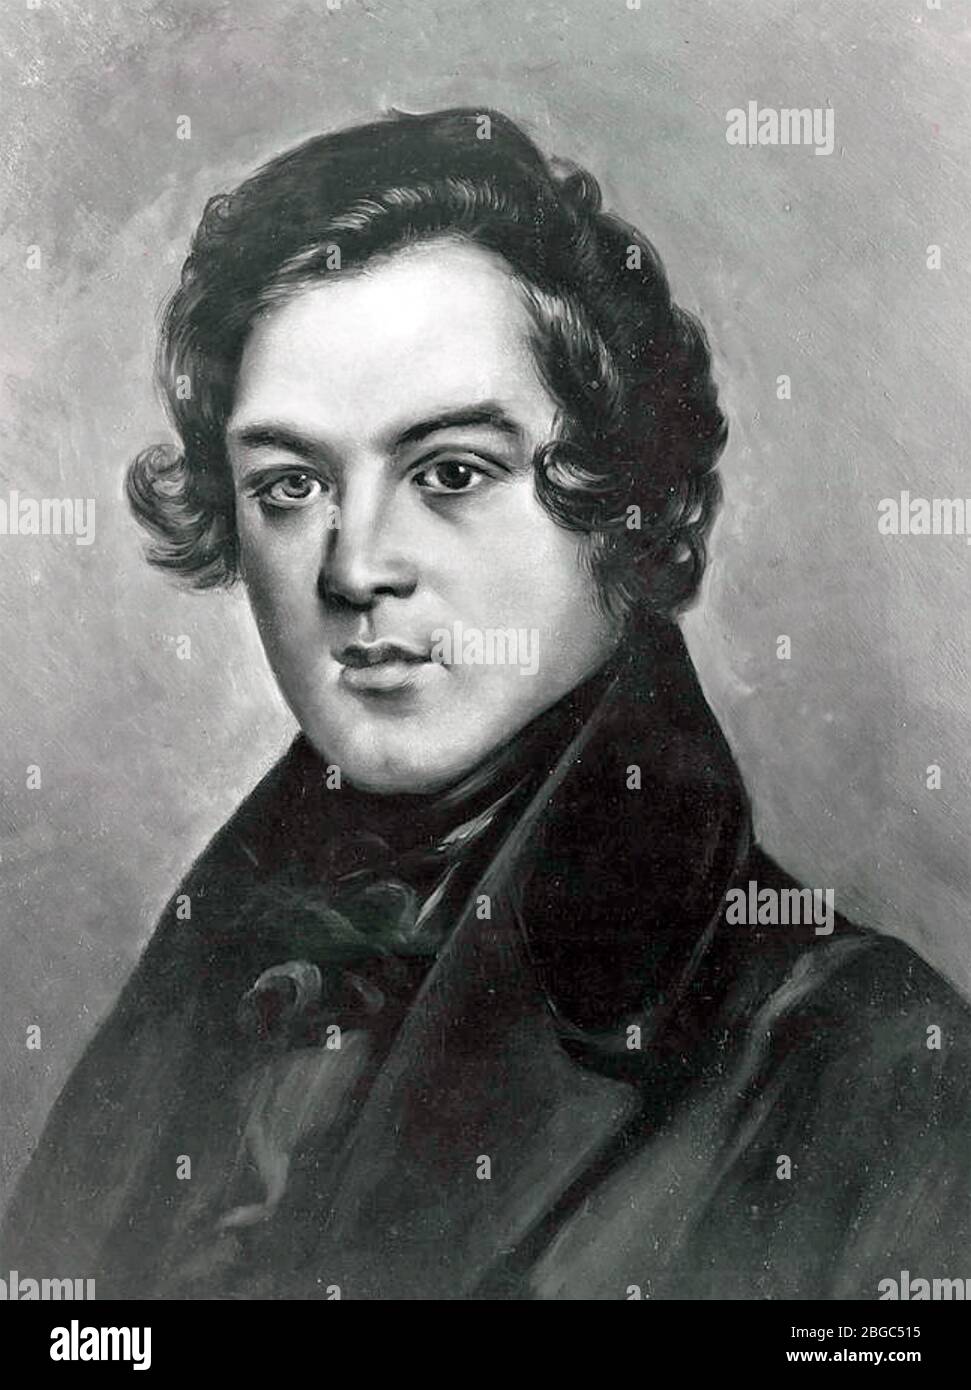 ROBERT SCHUMANN (1810-1856) compositeur allemand en 1839 Banque D'Images